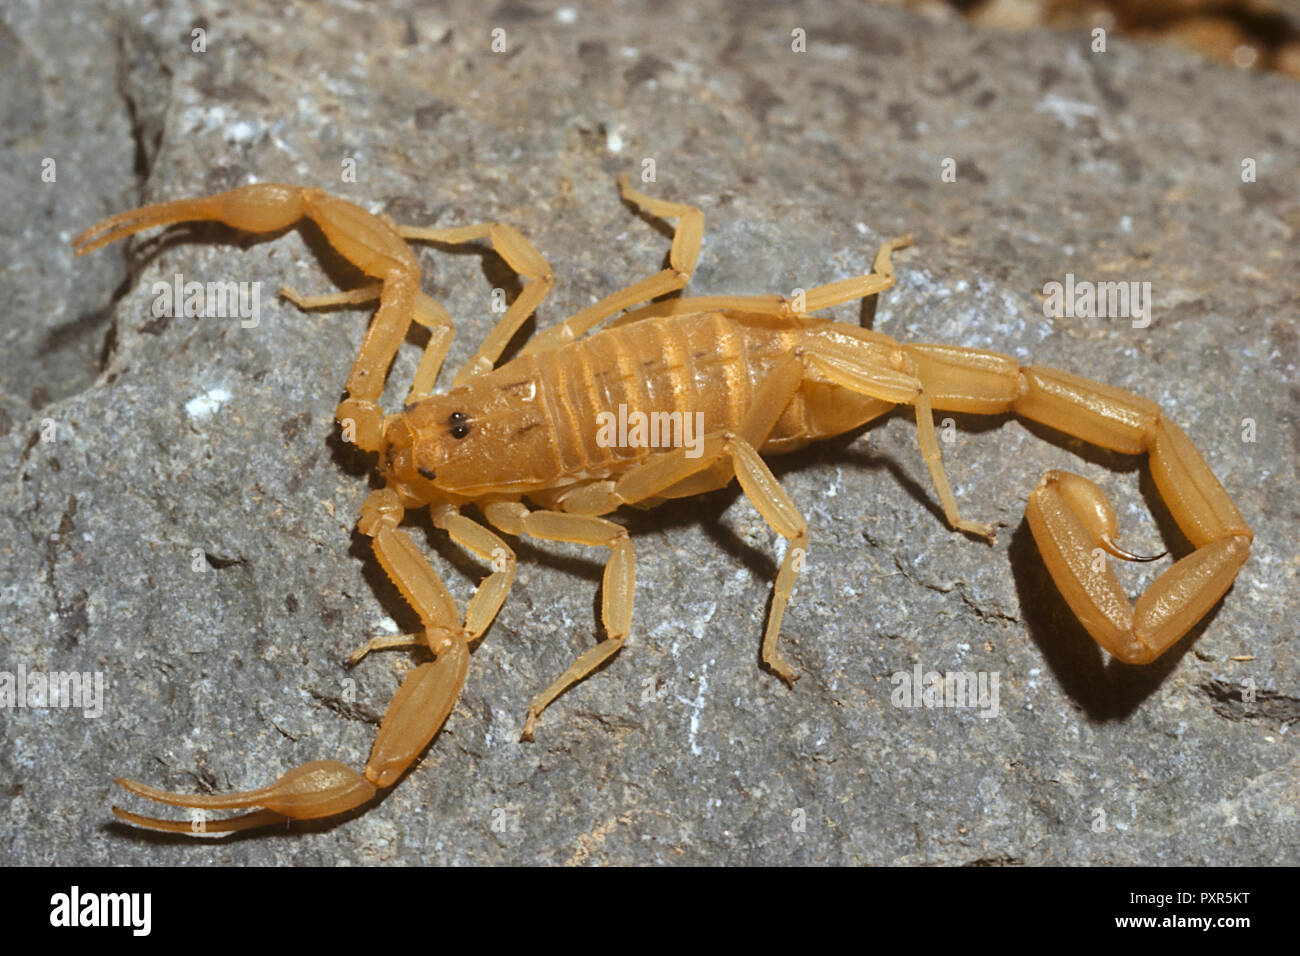 The Bark Scorpion (Centruroides exilicauda) is often found in under rocks during the day (Arizona) Stock Photo